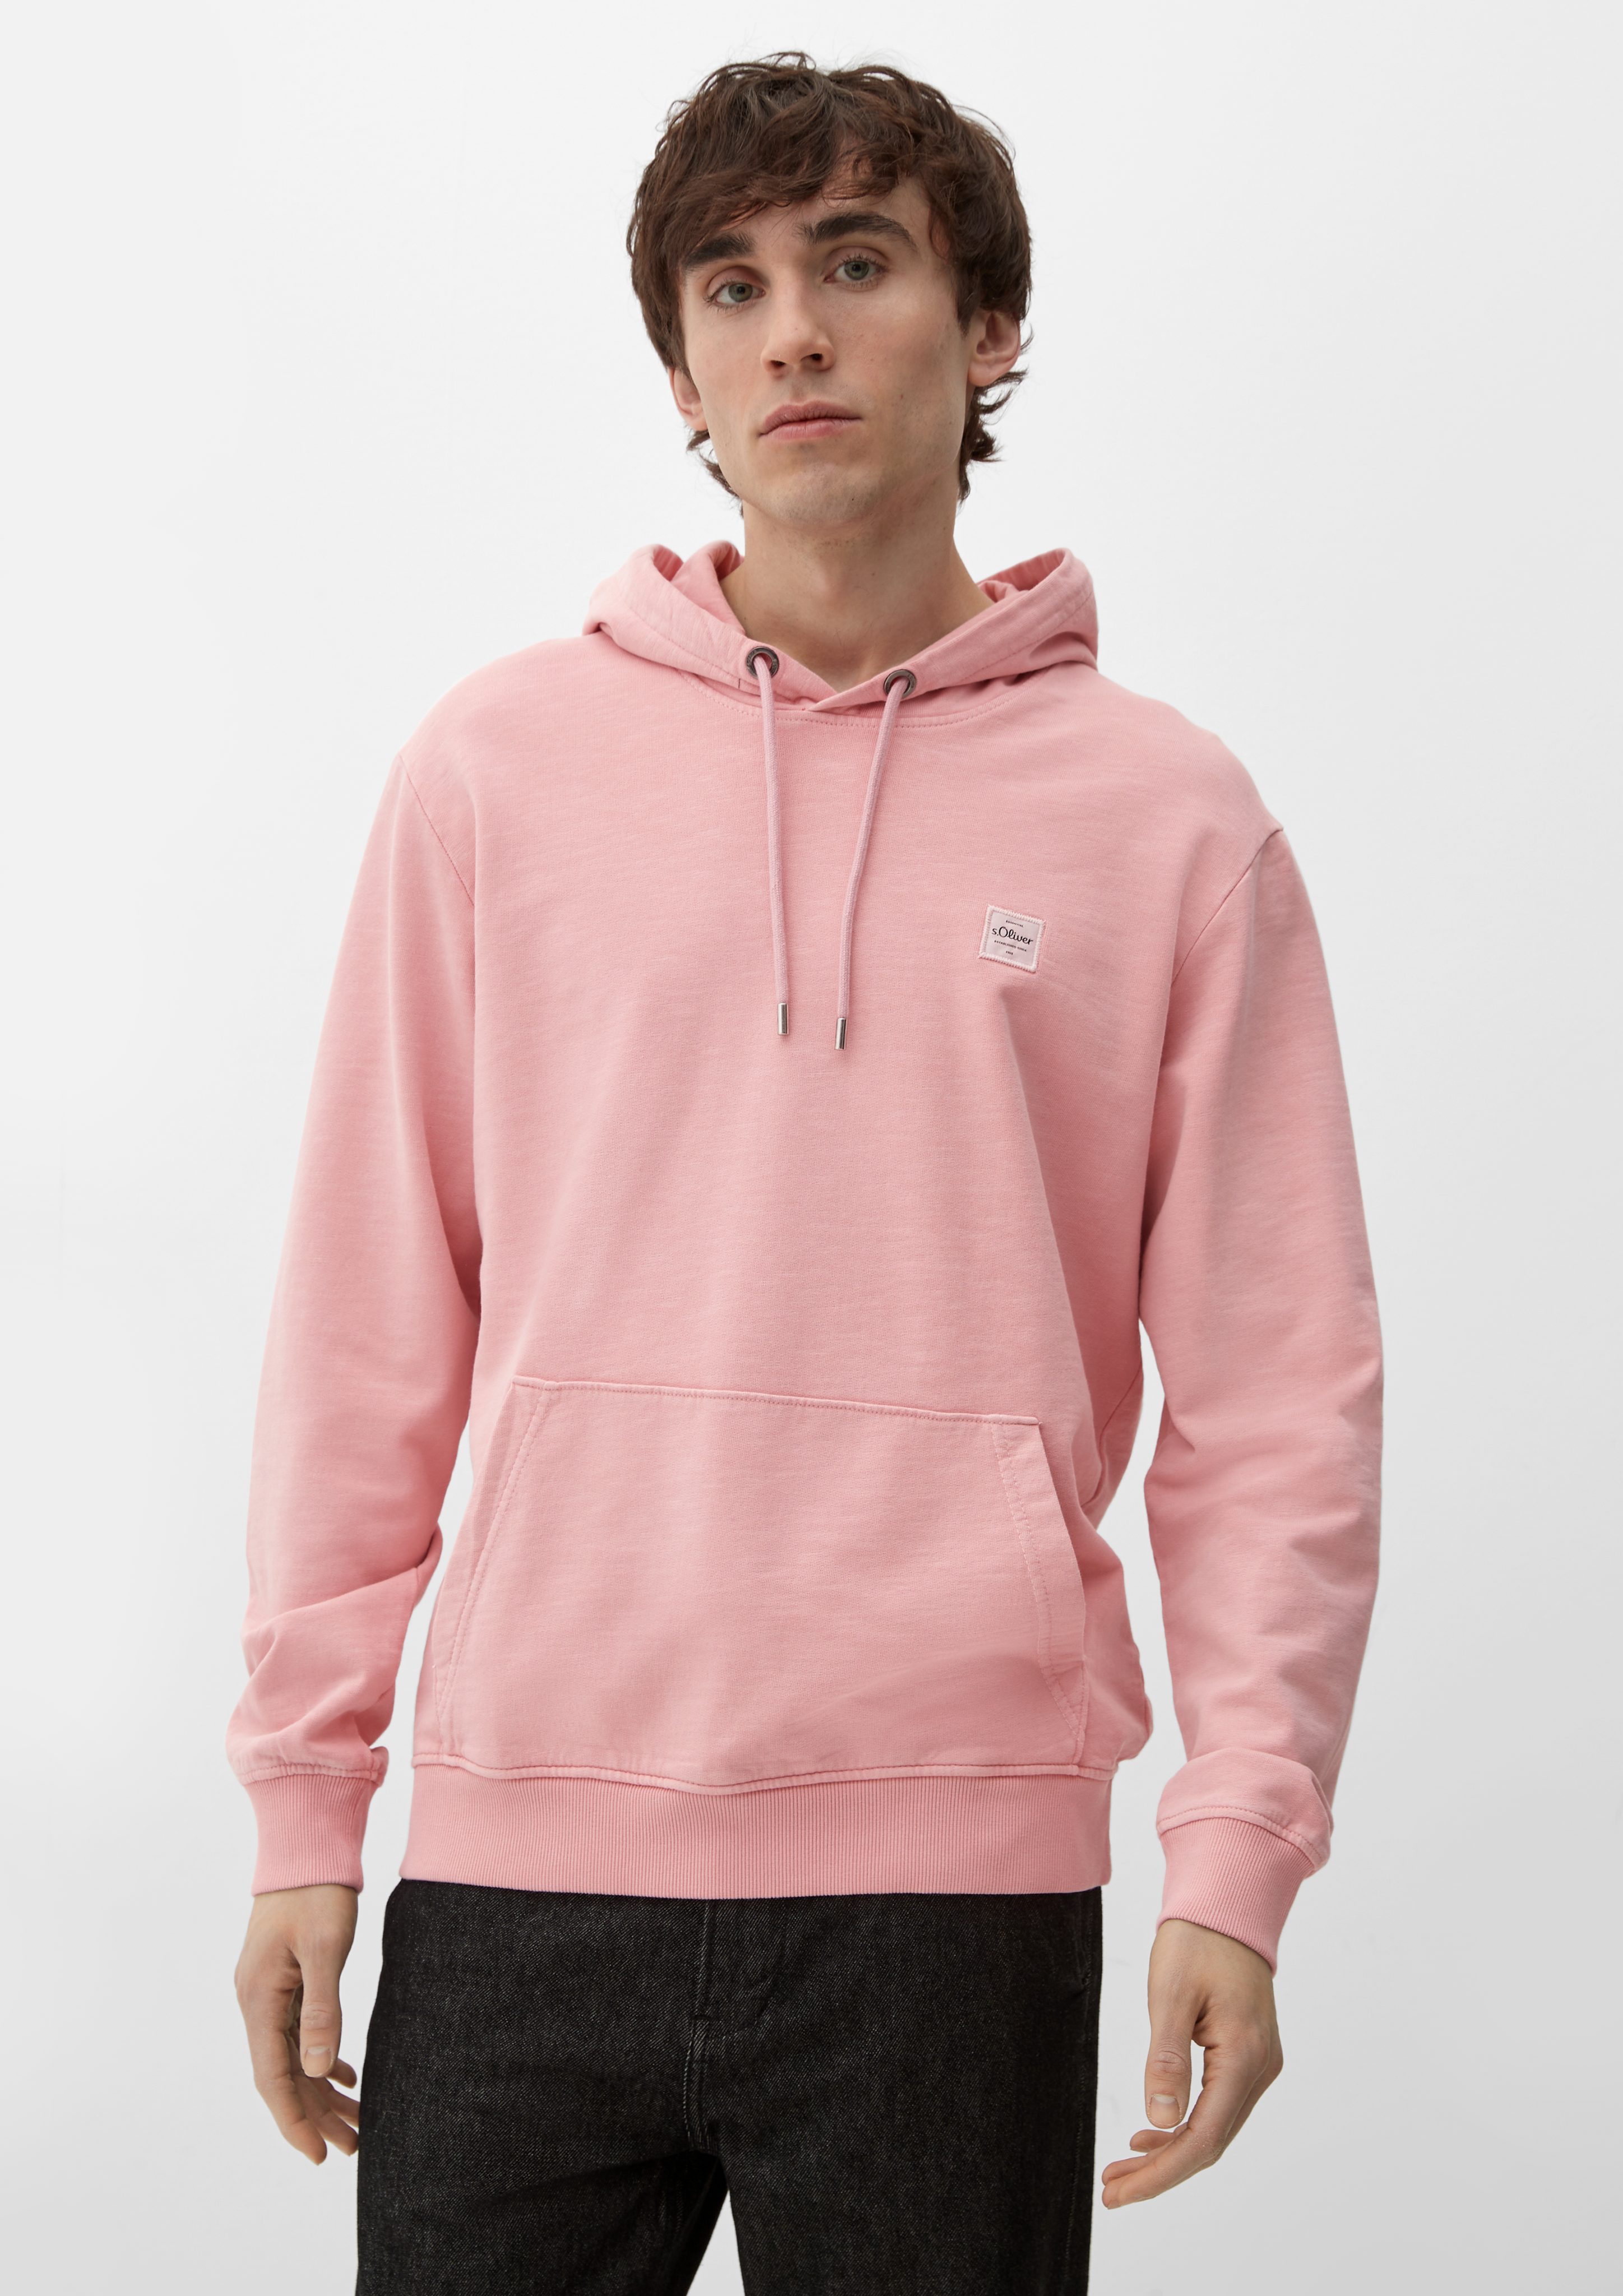 s.Oliver Sweatshirt Kapuzenpullover im Garment Dye, rosa Label-Patch Applikation, Garment Dye